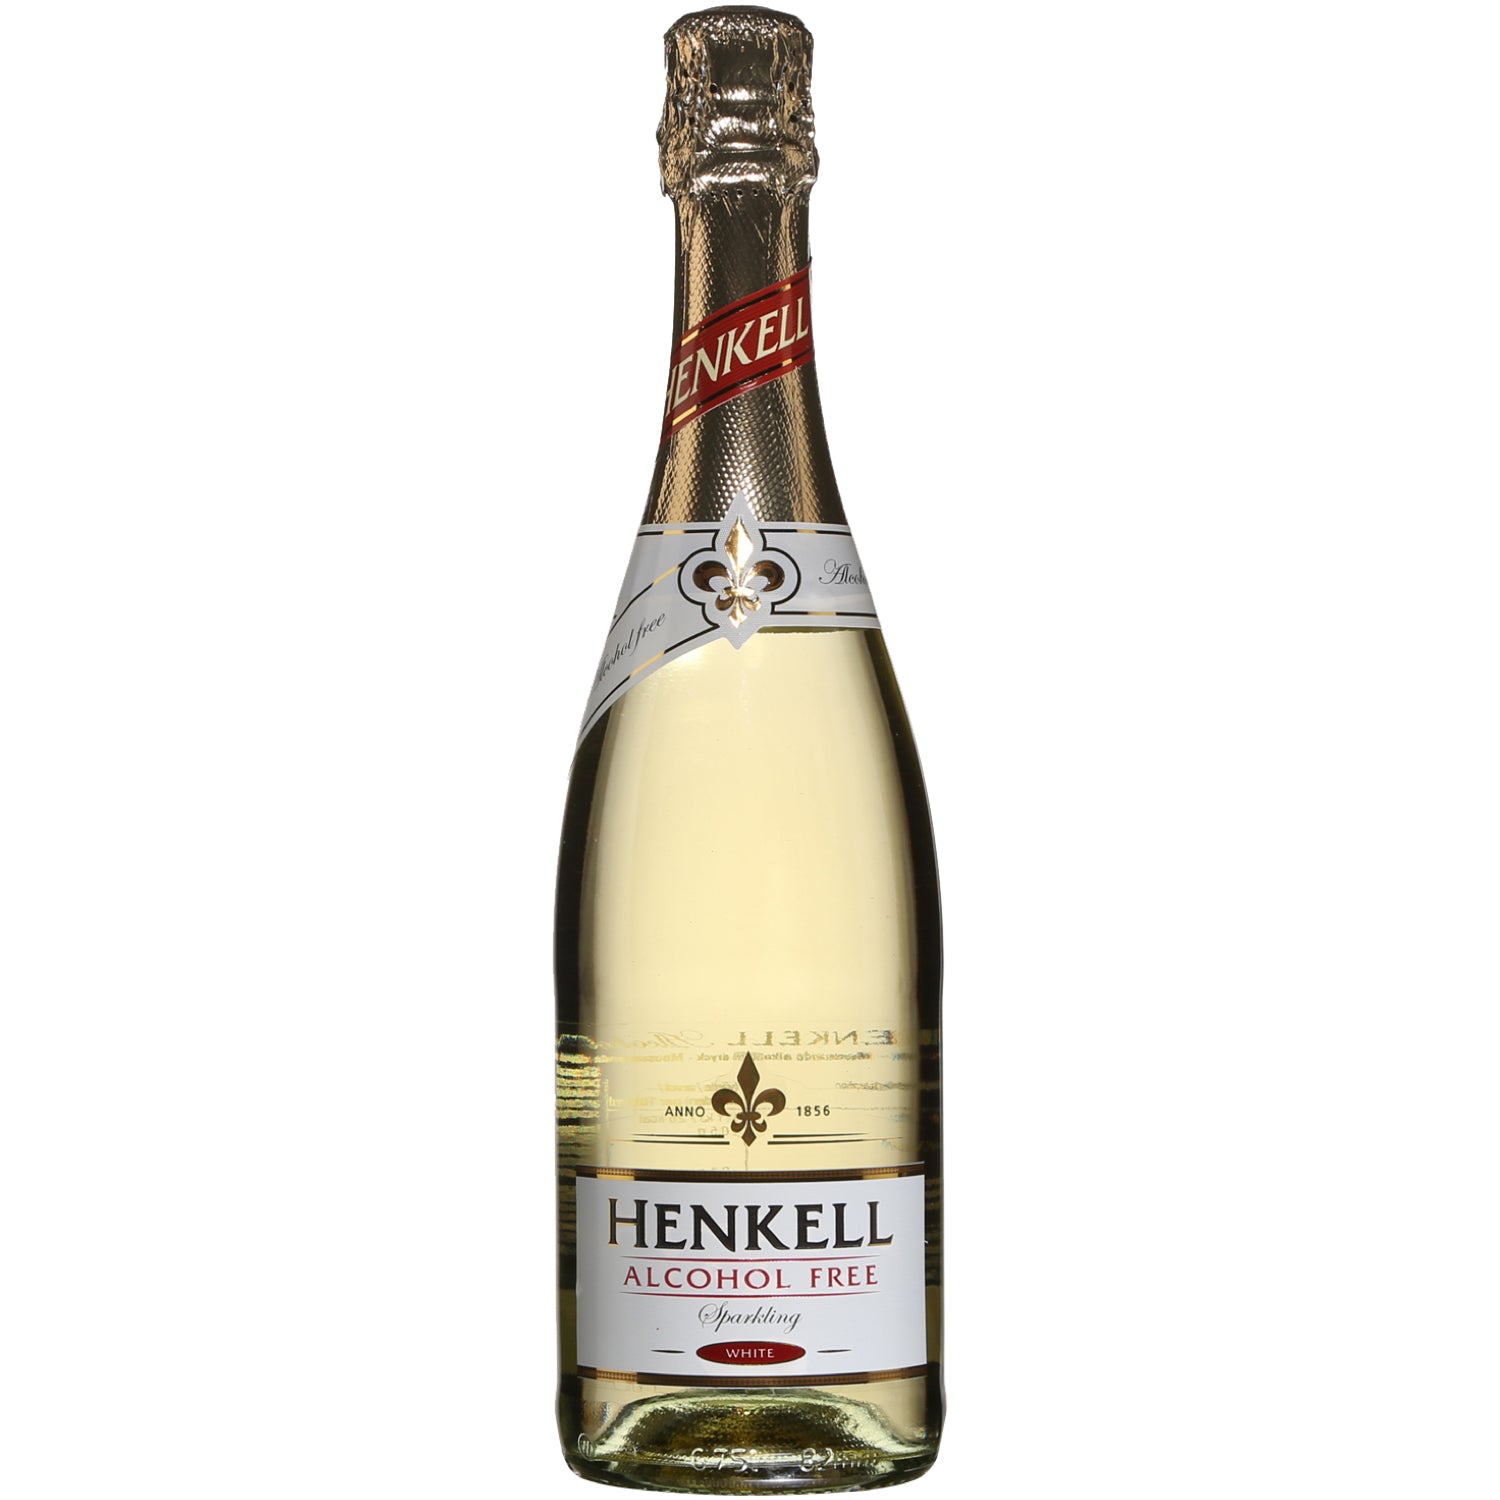 Henkell Alcohol Free [750ml]